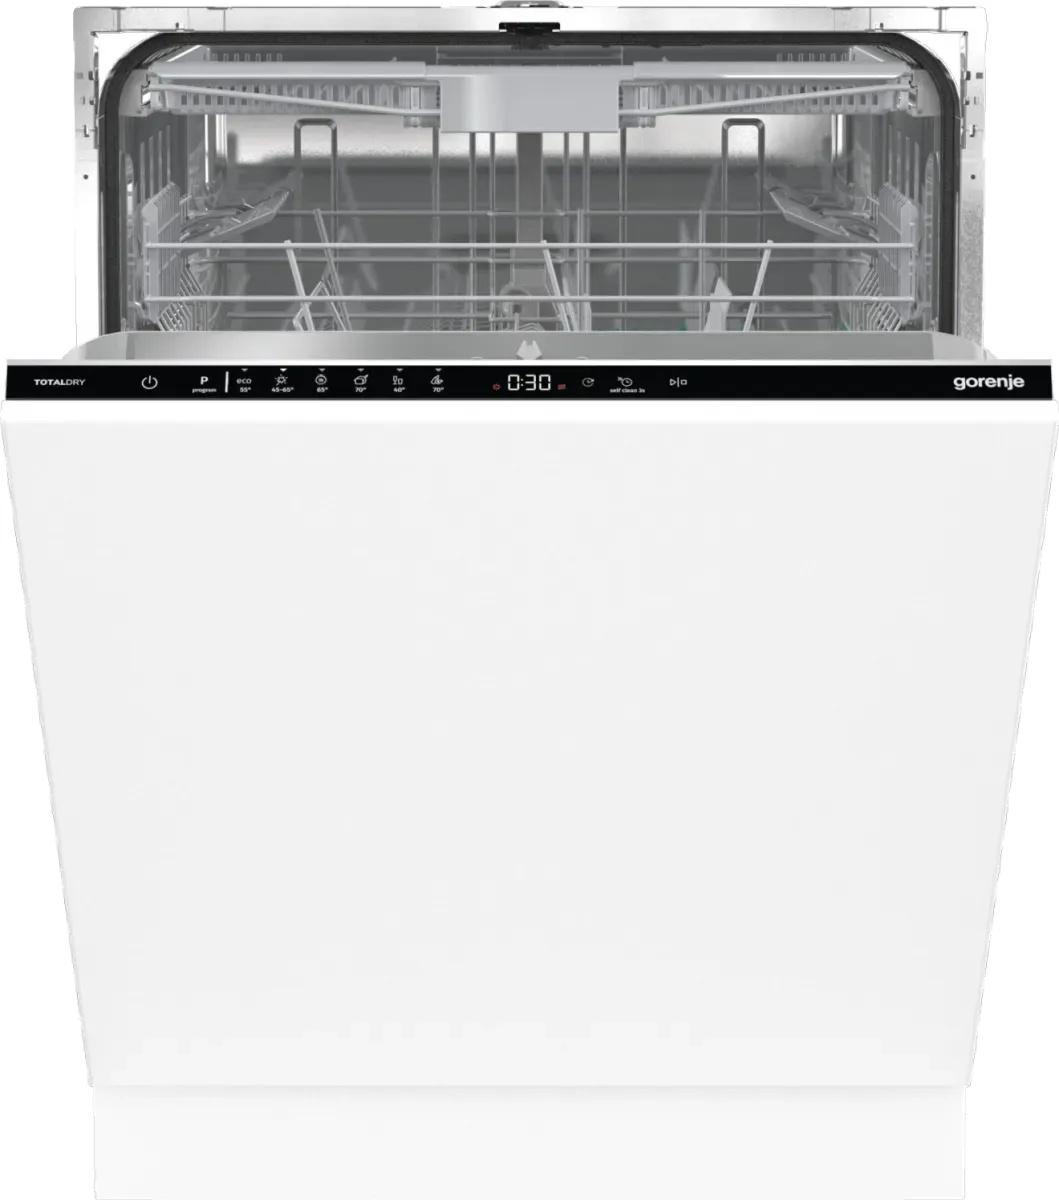 GORENJE GV 643D90 Ugradna mašina za pranje sudova, 16 kompleta, 6 programa, Bela